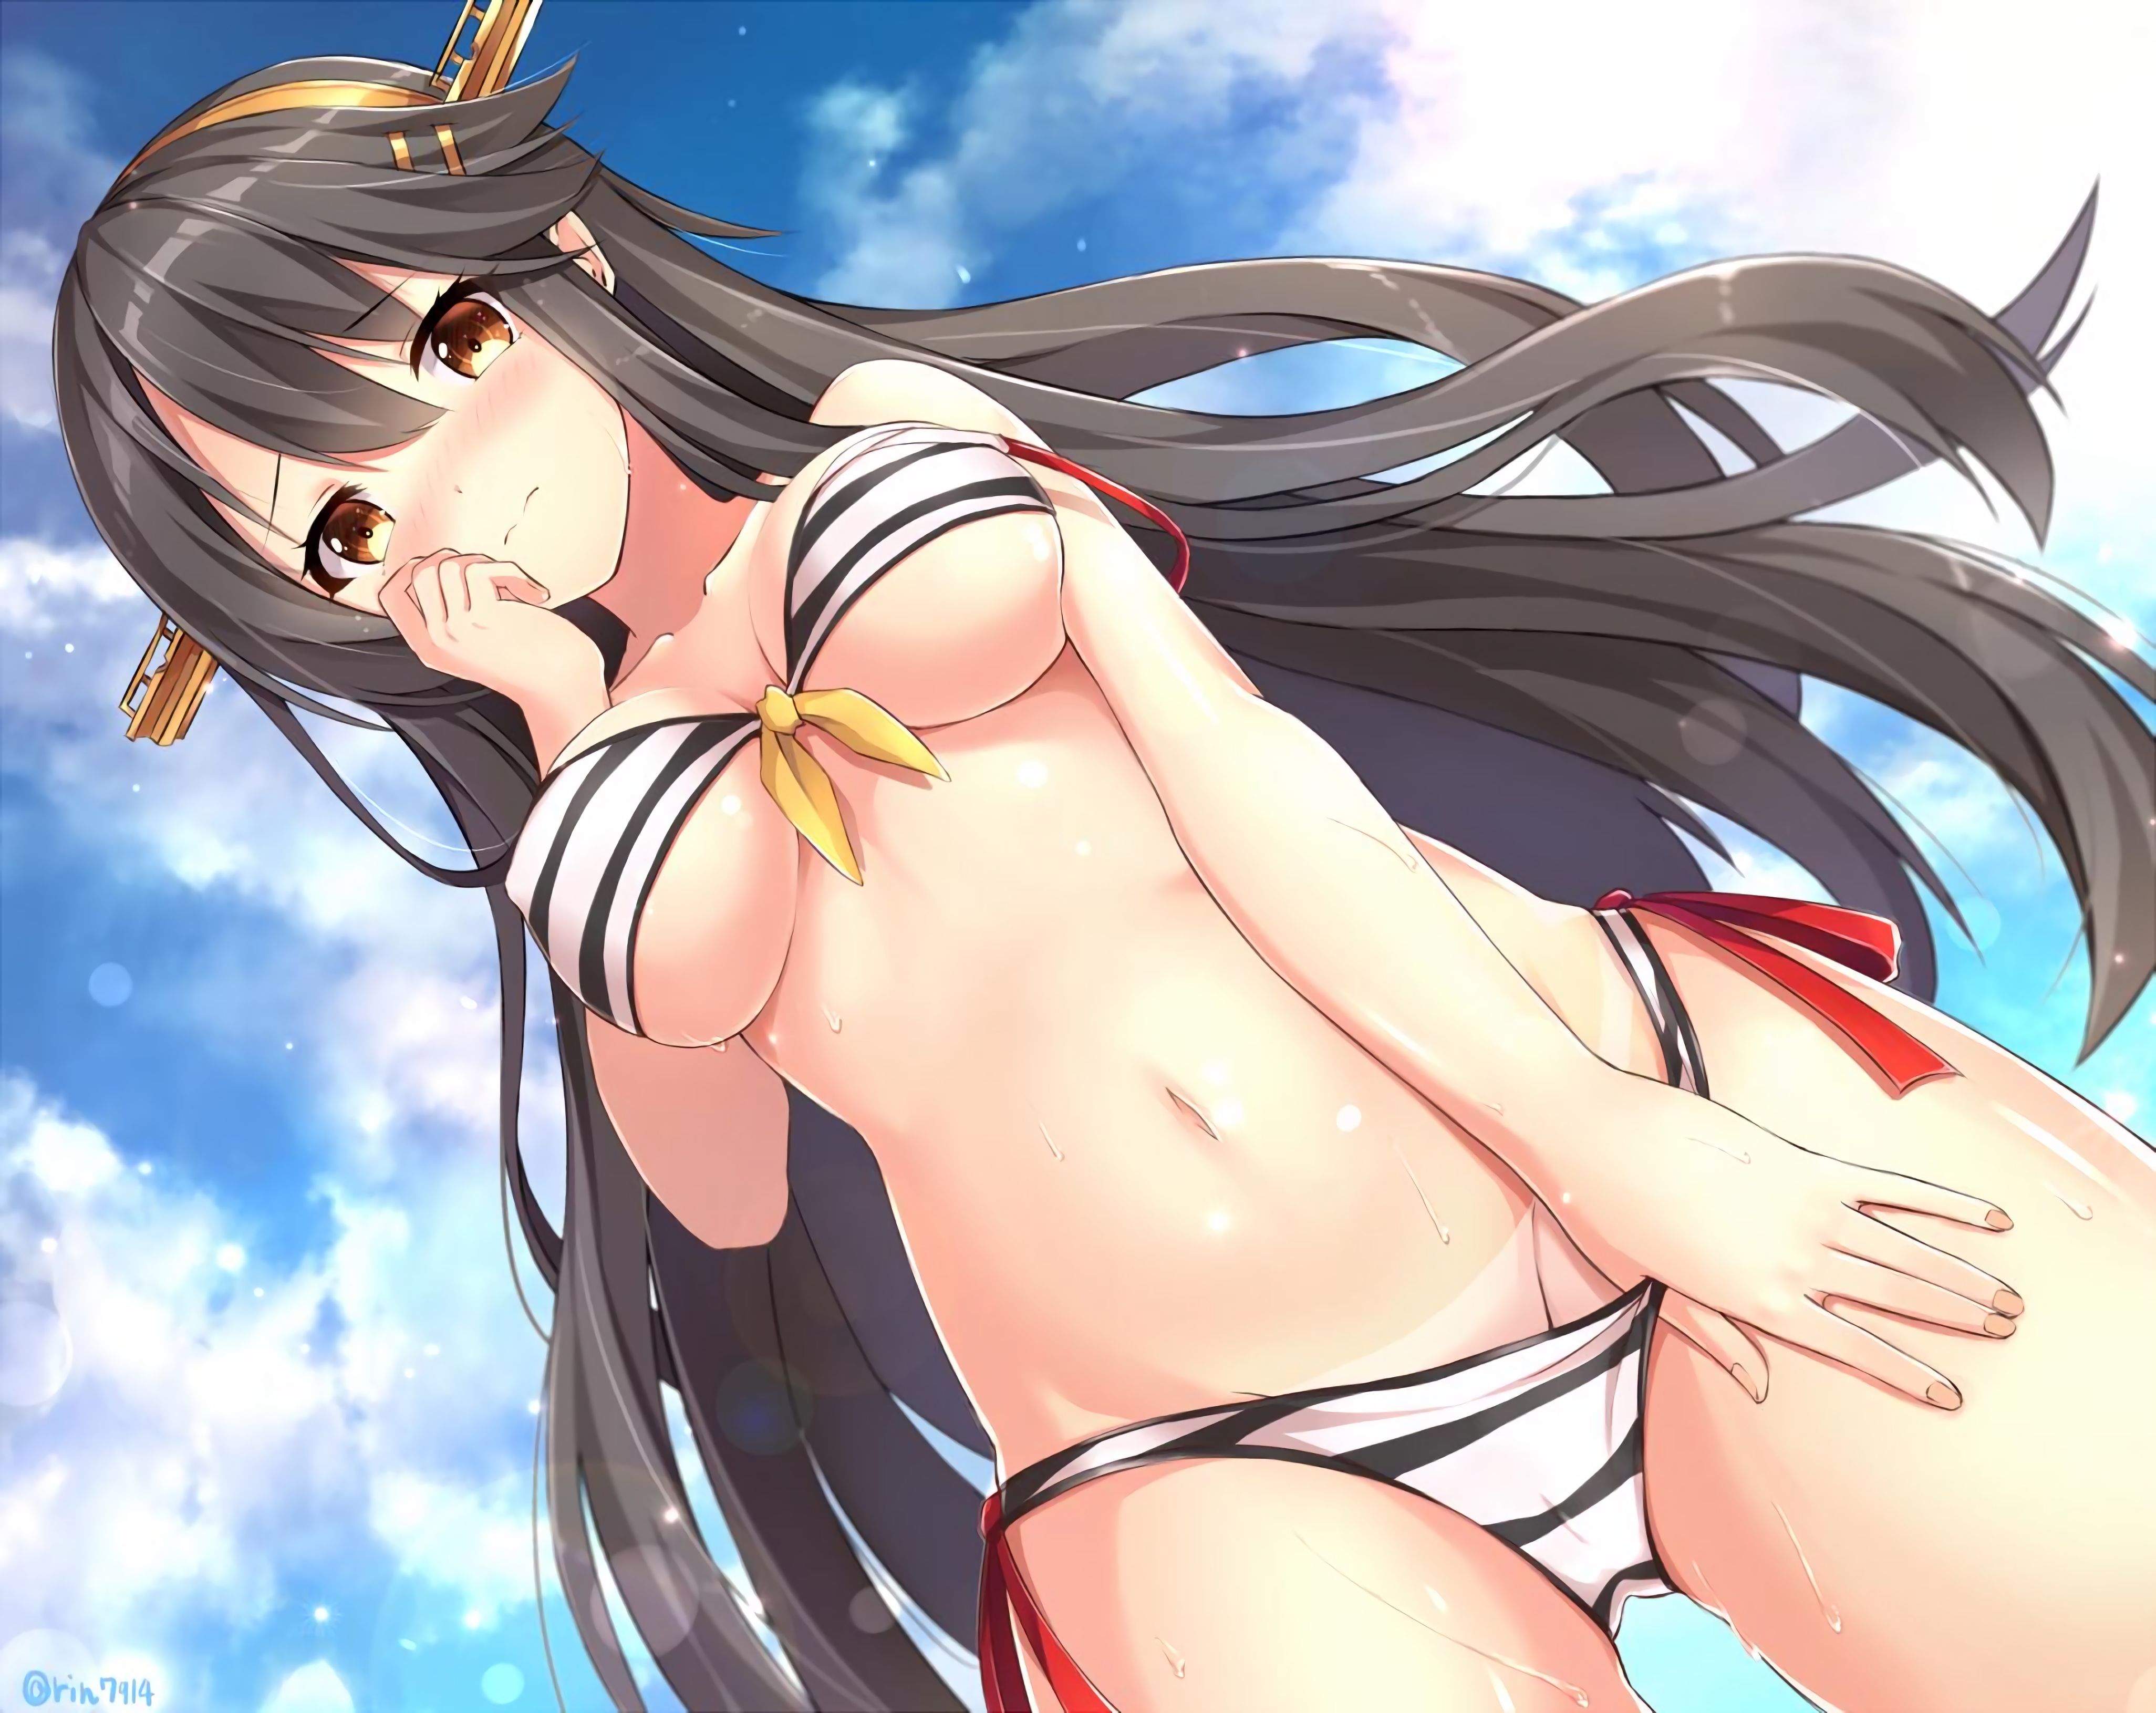 Erotic anime summary erotic images of beautiful girls wearing striped bikinis [50 photos] 32